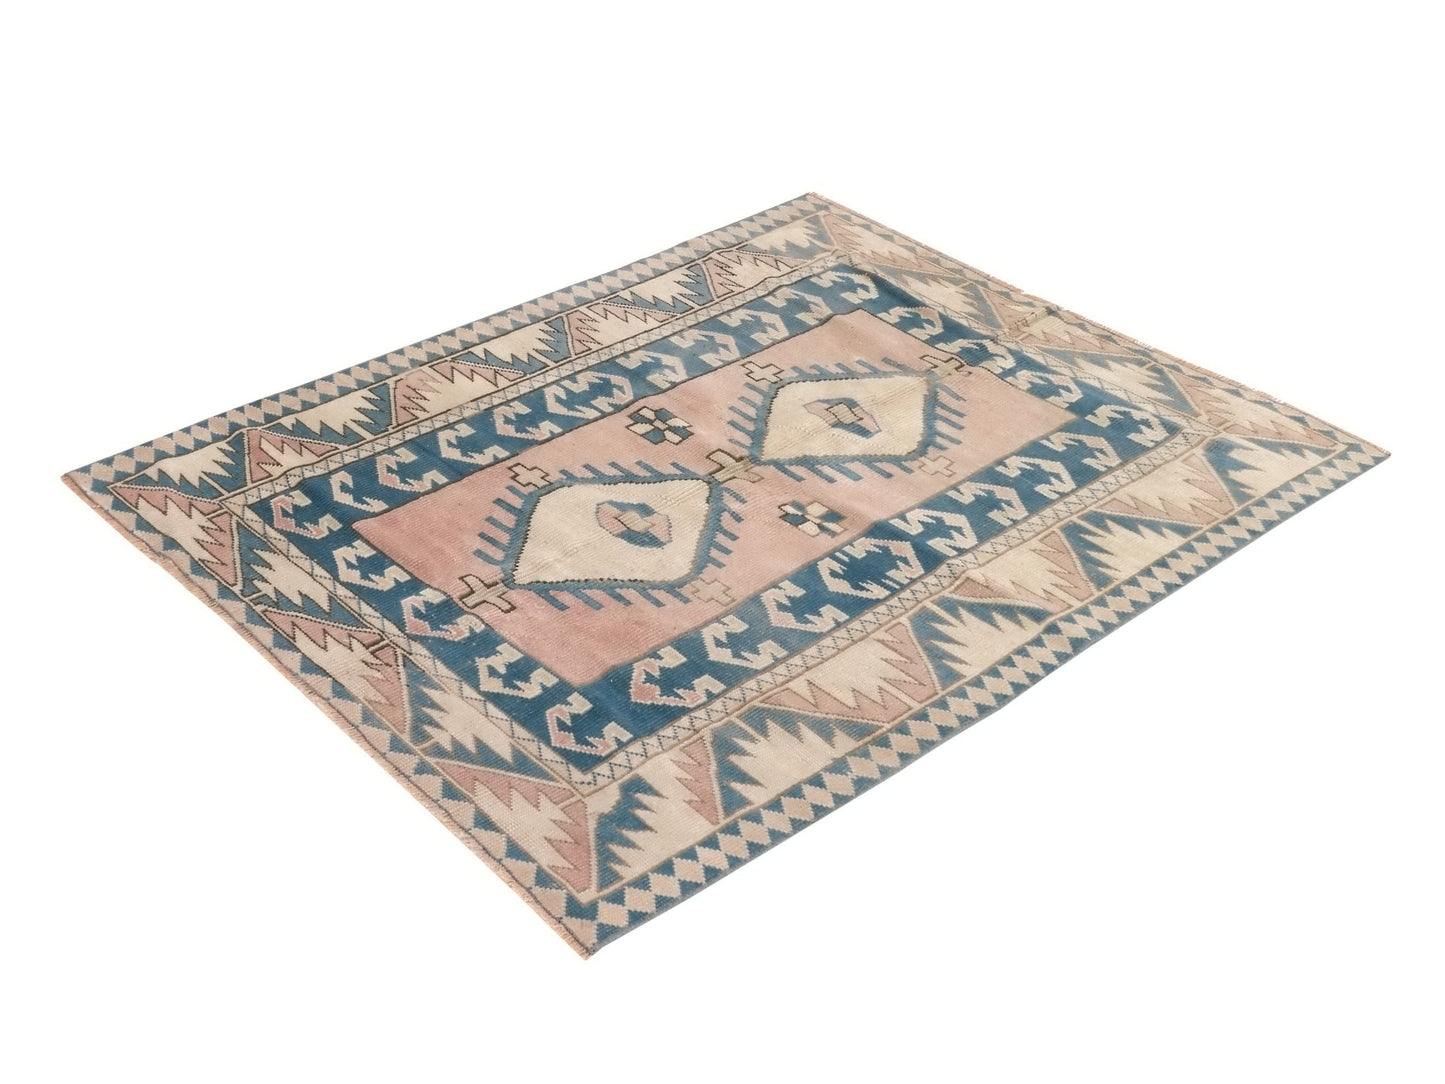 Geometric Turkish rug, Anatolia Rug, Oushak Rug, Vintage Rug, Unique rug, Wool rug, Handmade rug, Small rug 4x5, Entryway rug, 9062